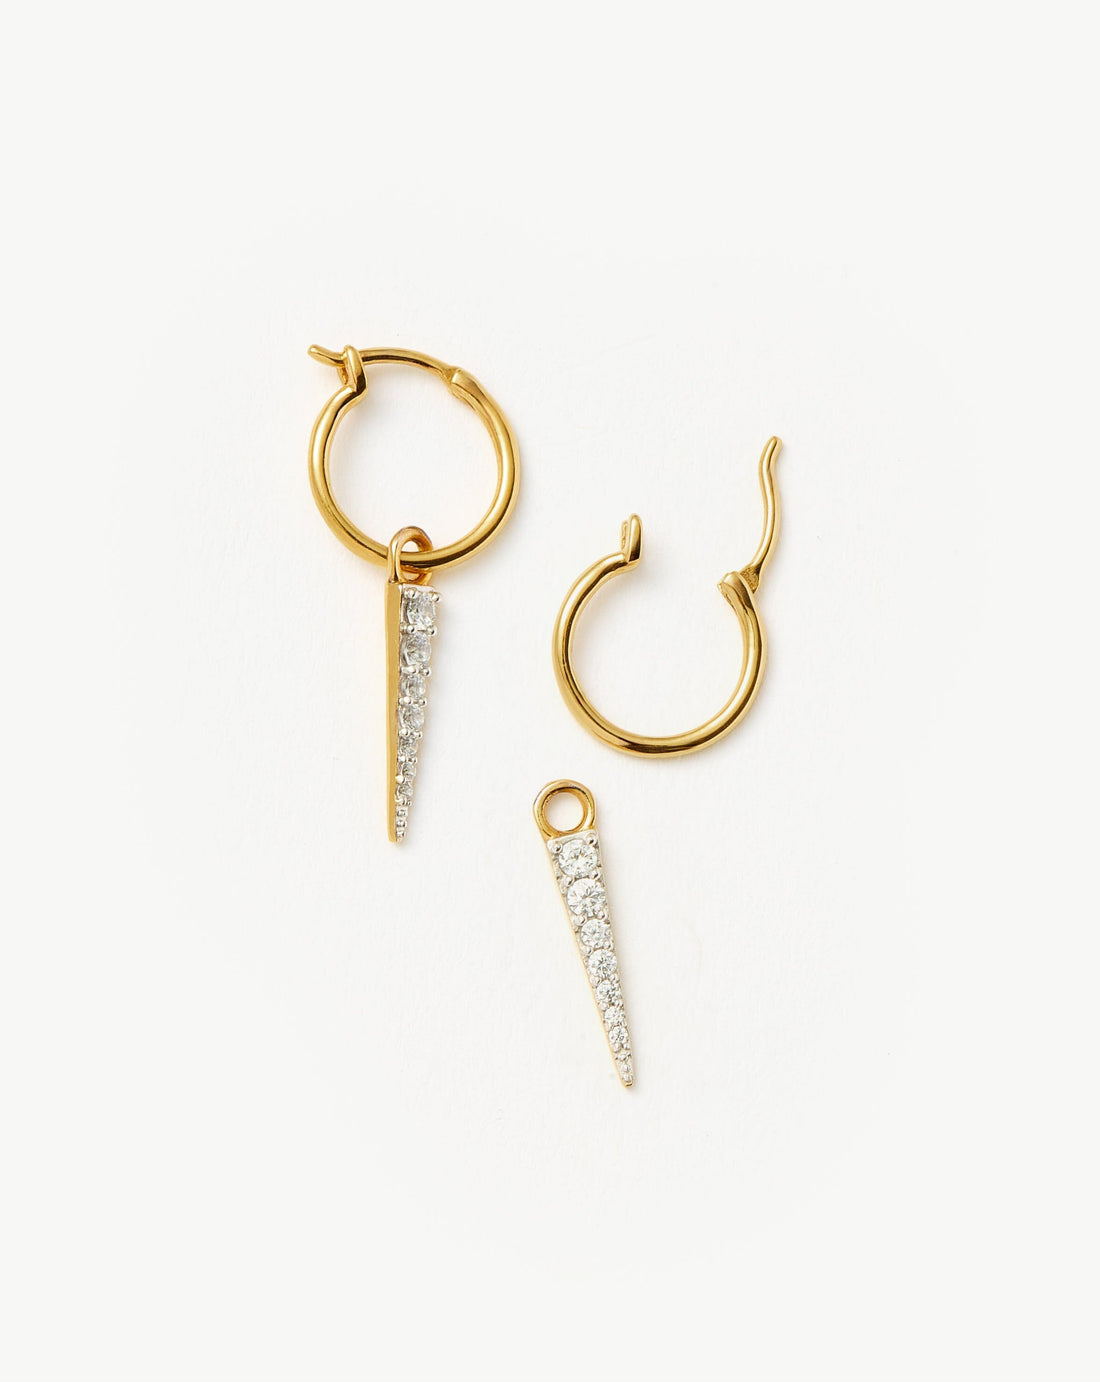 Yangtze River Delta Earrings | 18ct Gold Plated